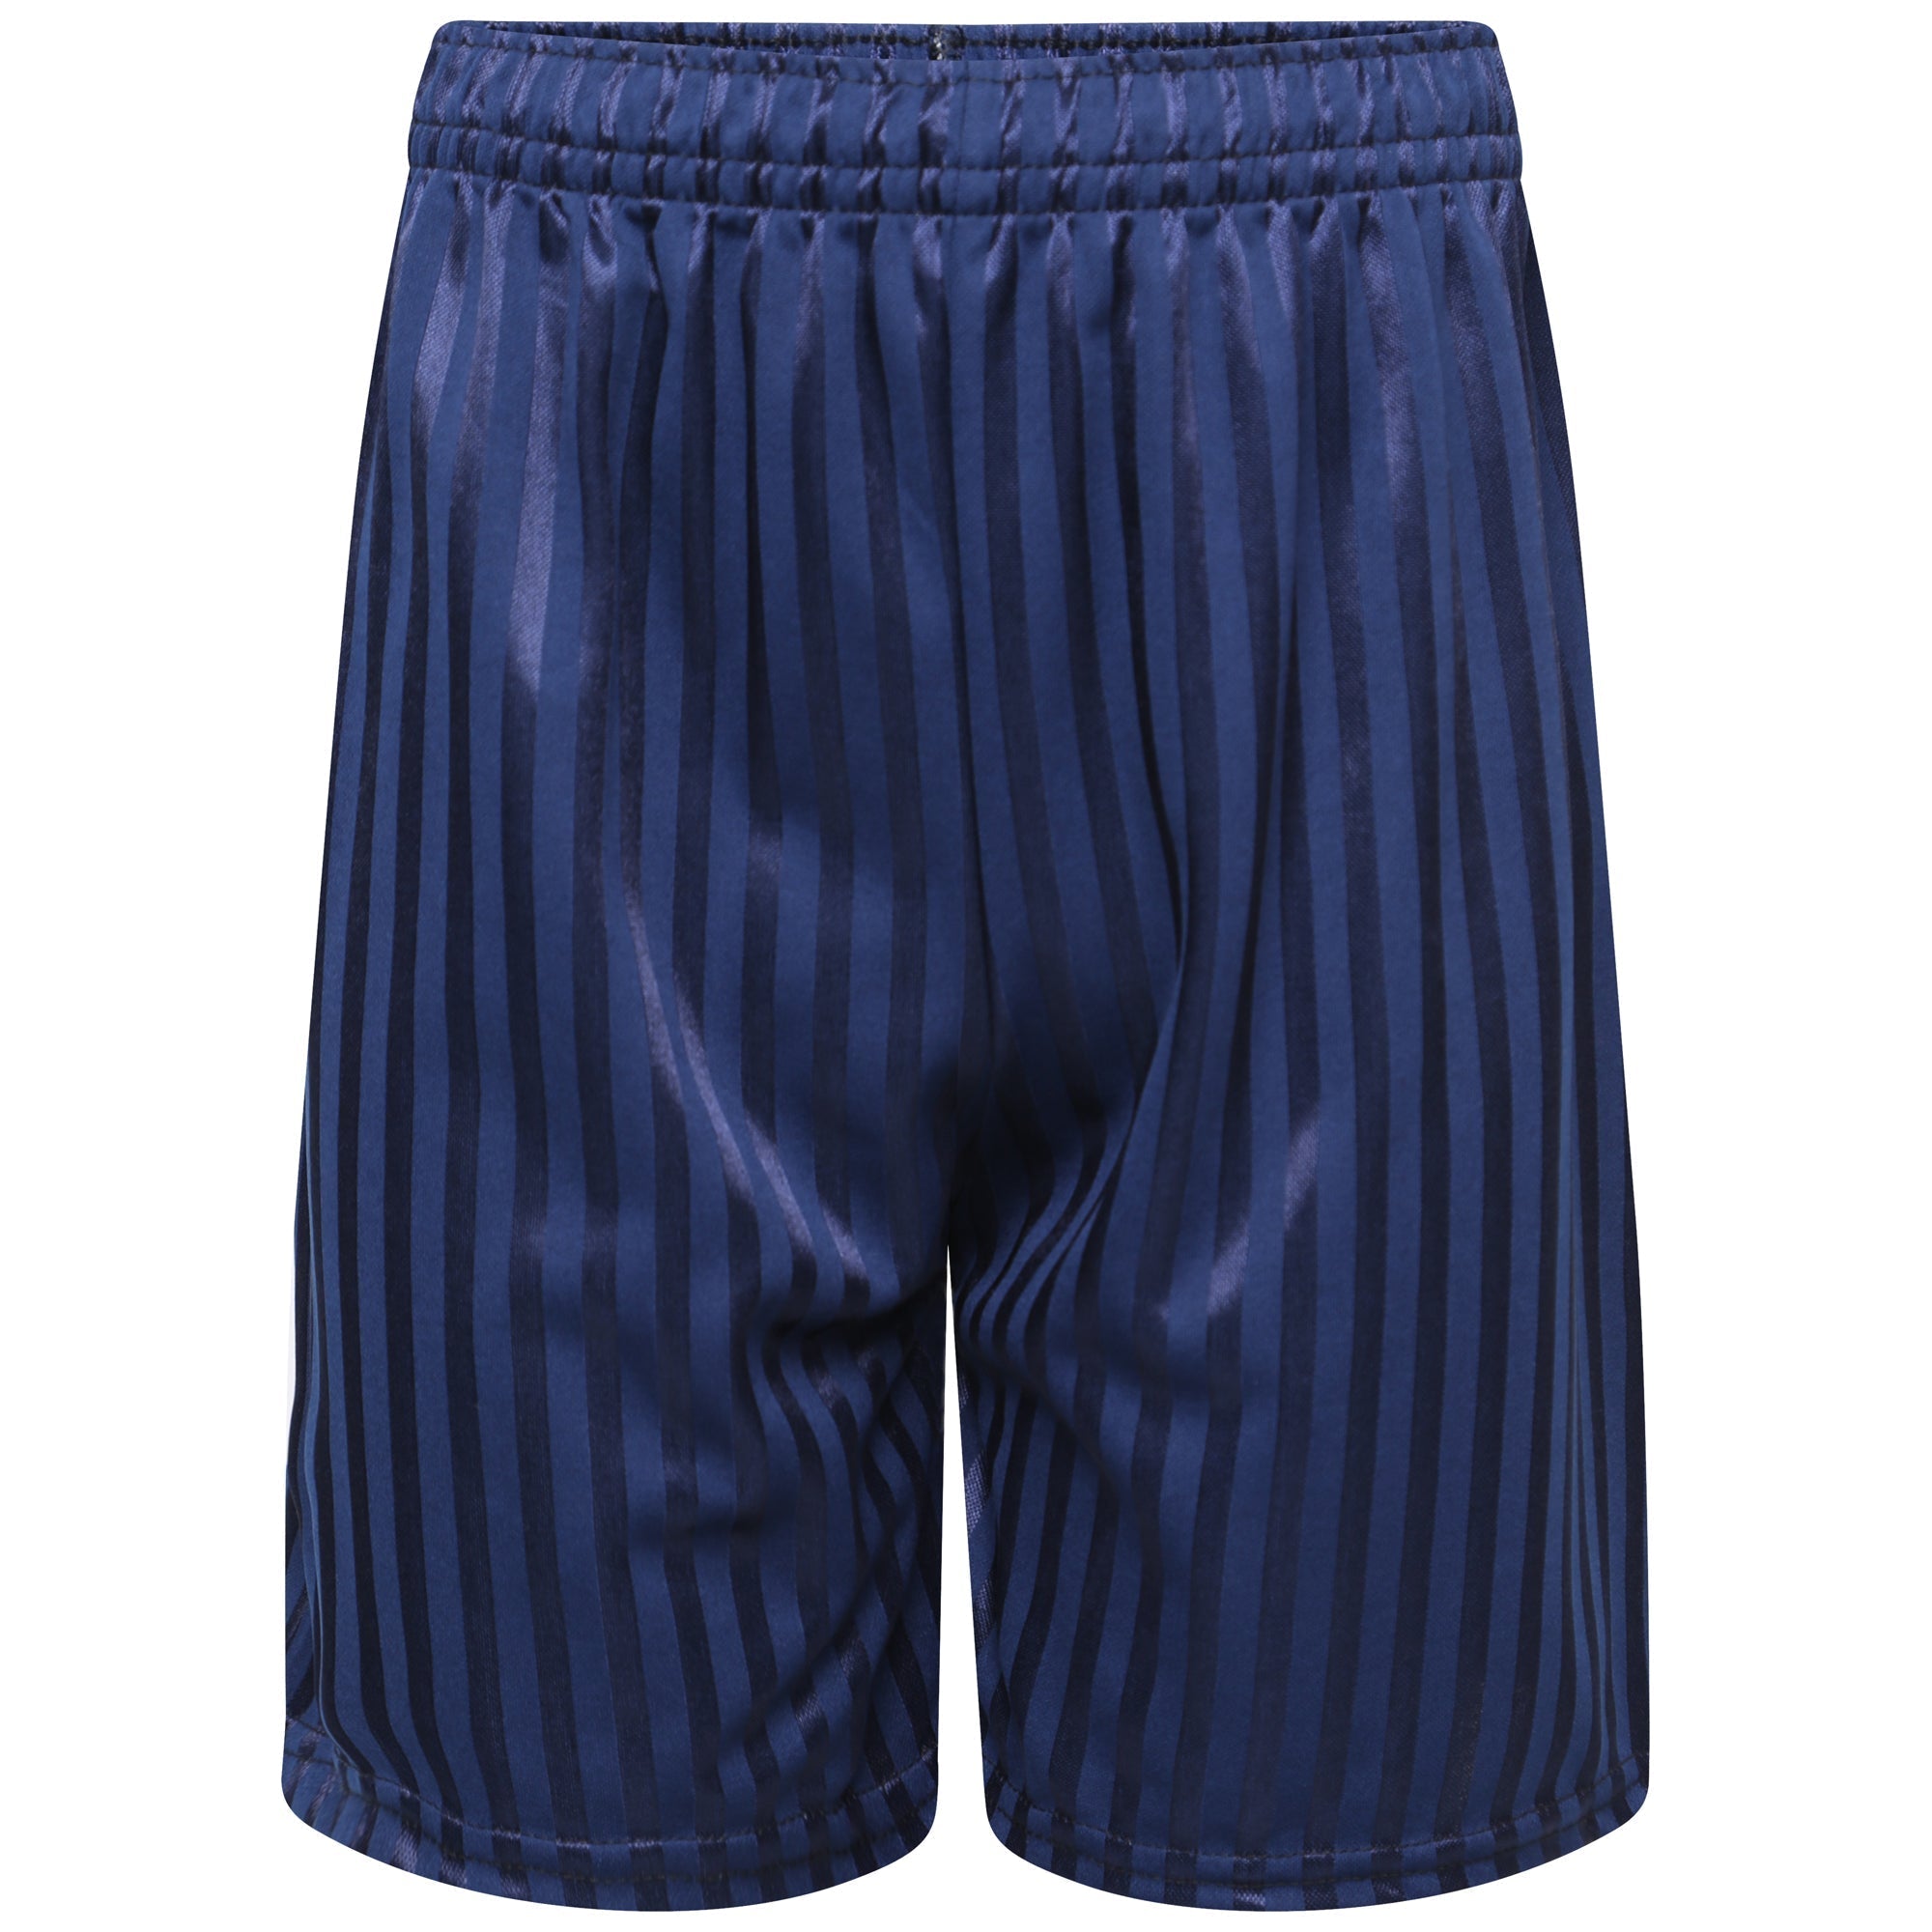 School Shadow Stripe Shorts Boys Girls Adult Football Gym Sports Short Navy Blue Unisex Pe Machine Washable